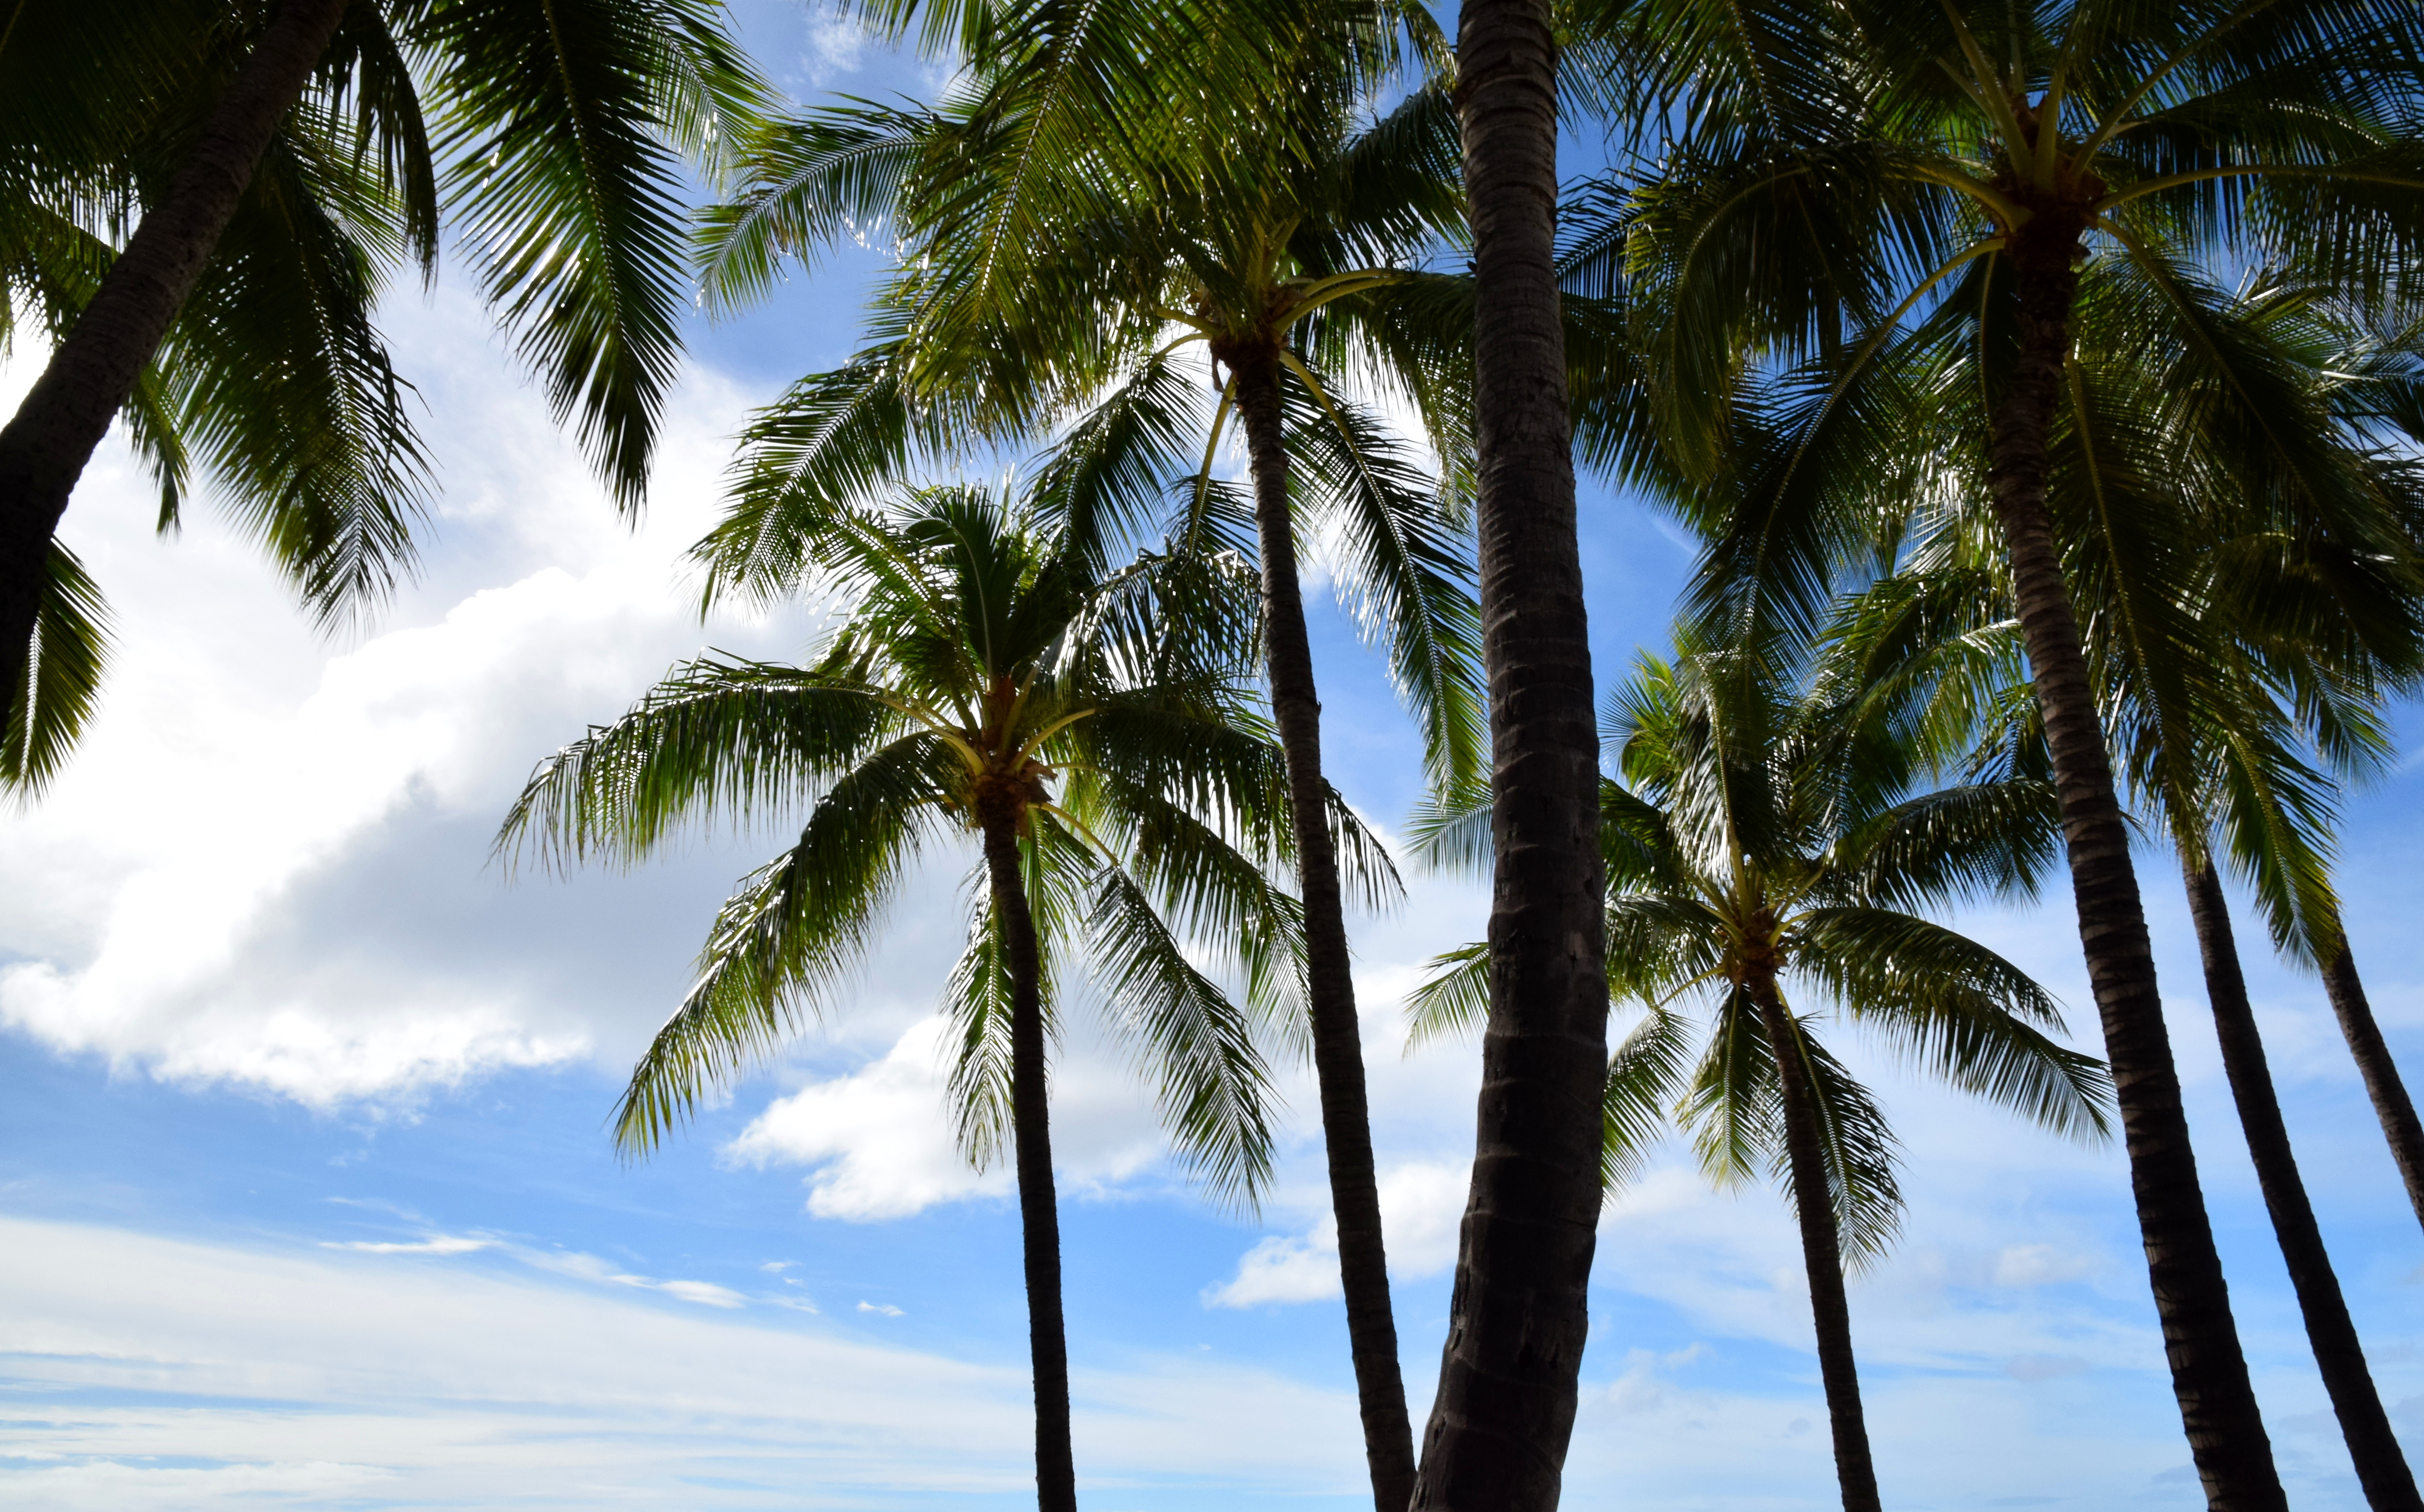 File:Palms and Sky (23231226964).jpg - Wikimedia Commons